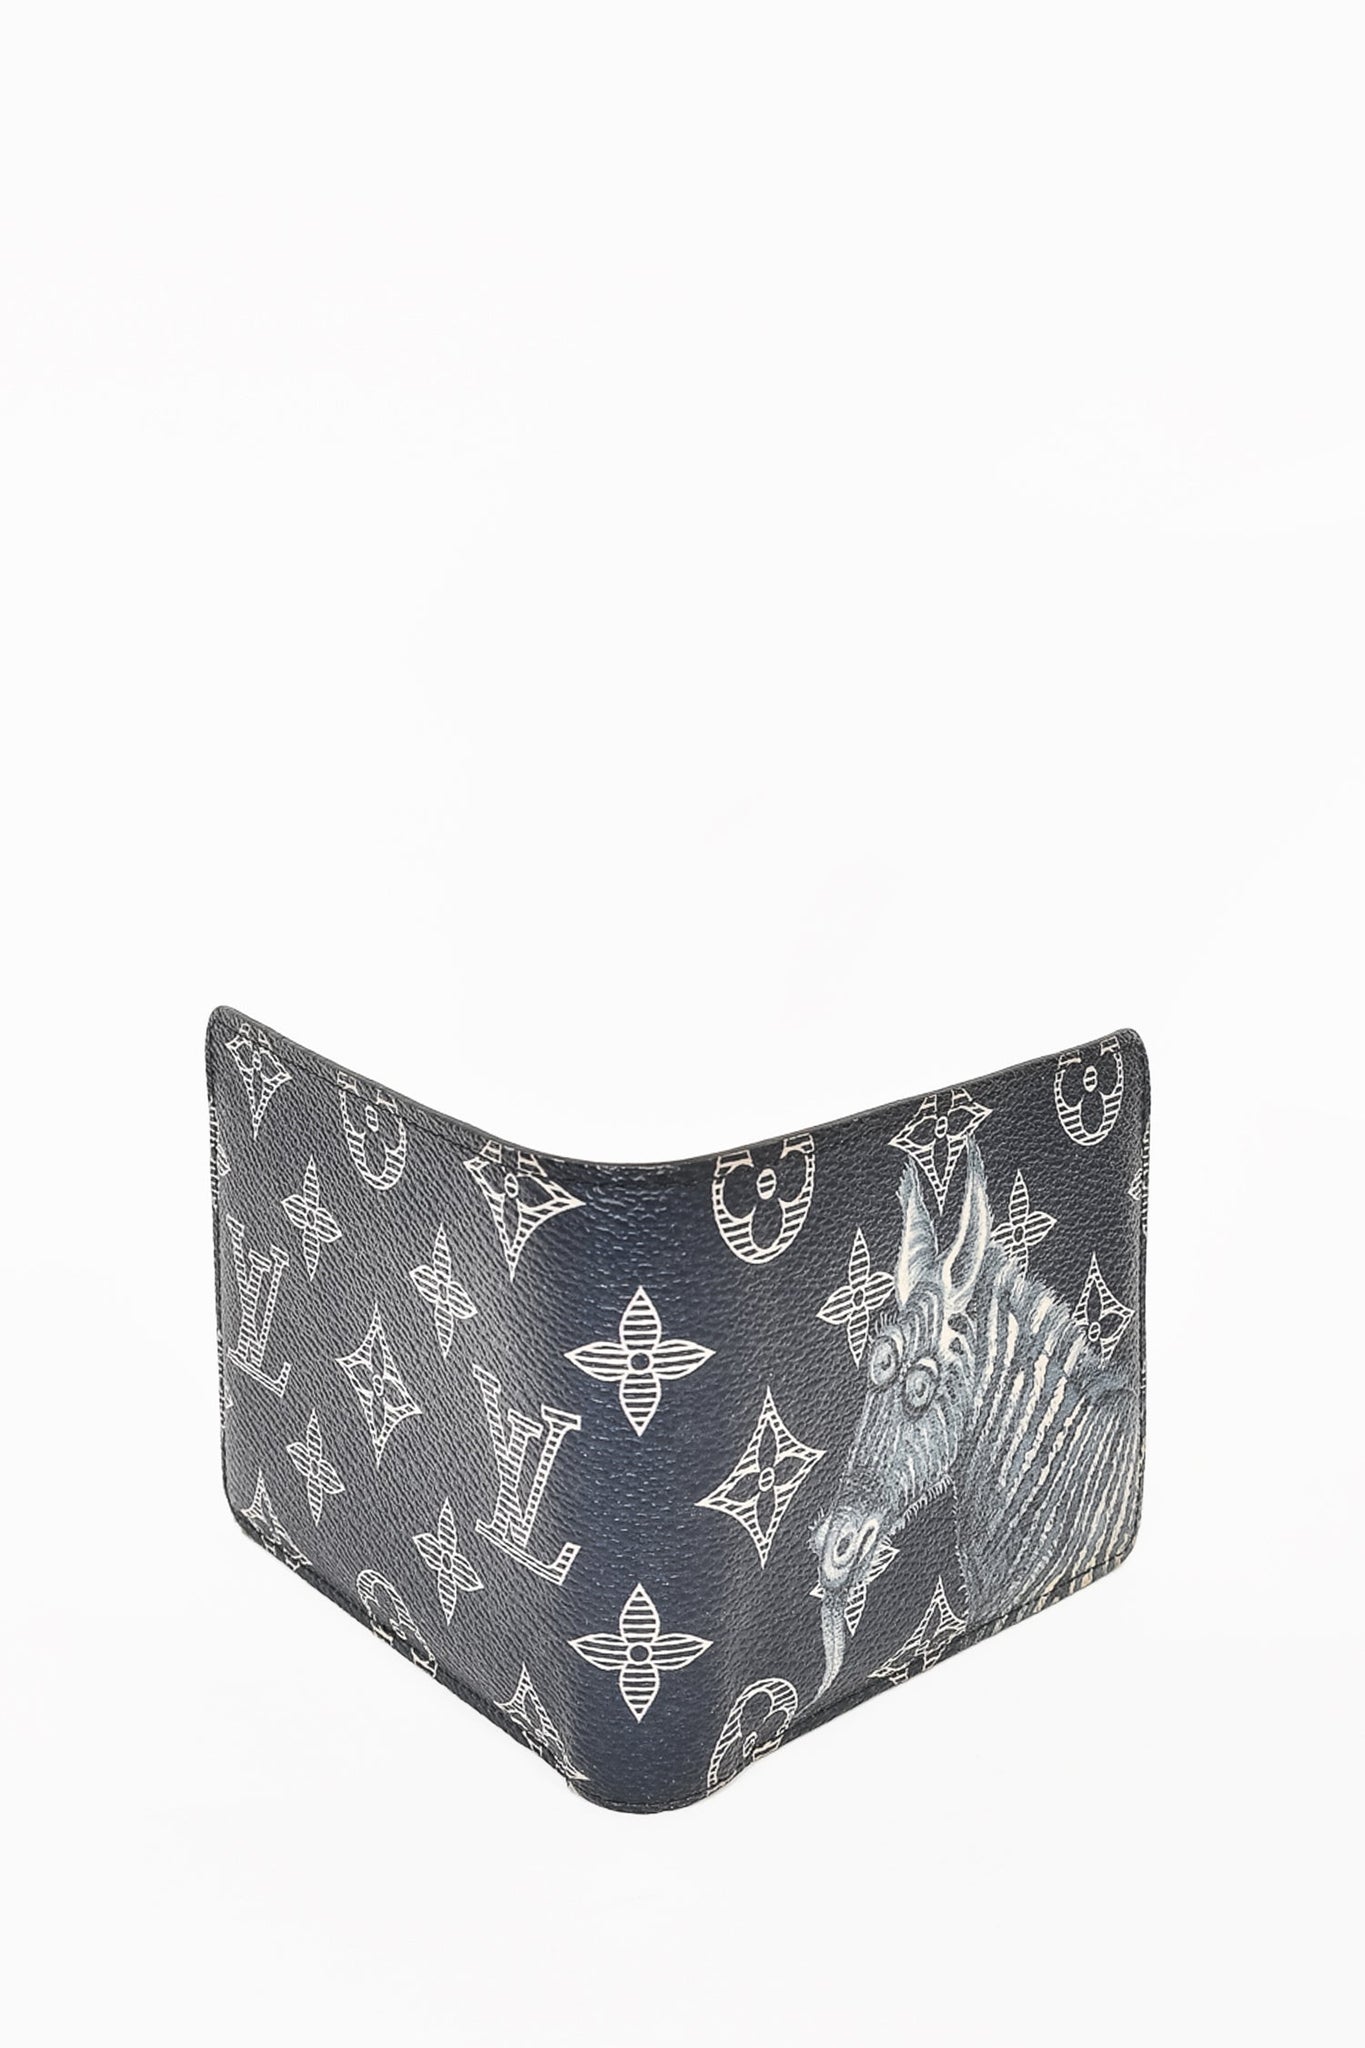 Louis Vuitton Black Monogram Limited Edition 'Chapmans Brothers' Wallet w/ Zebra Print